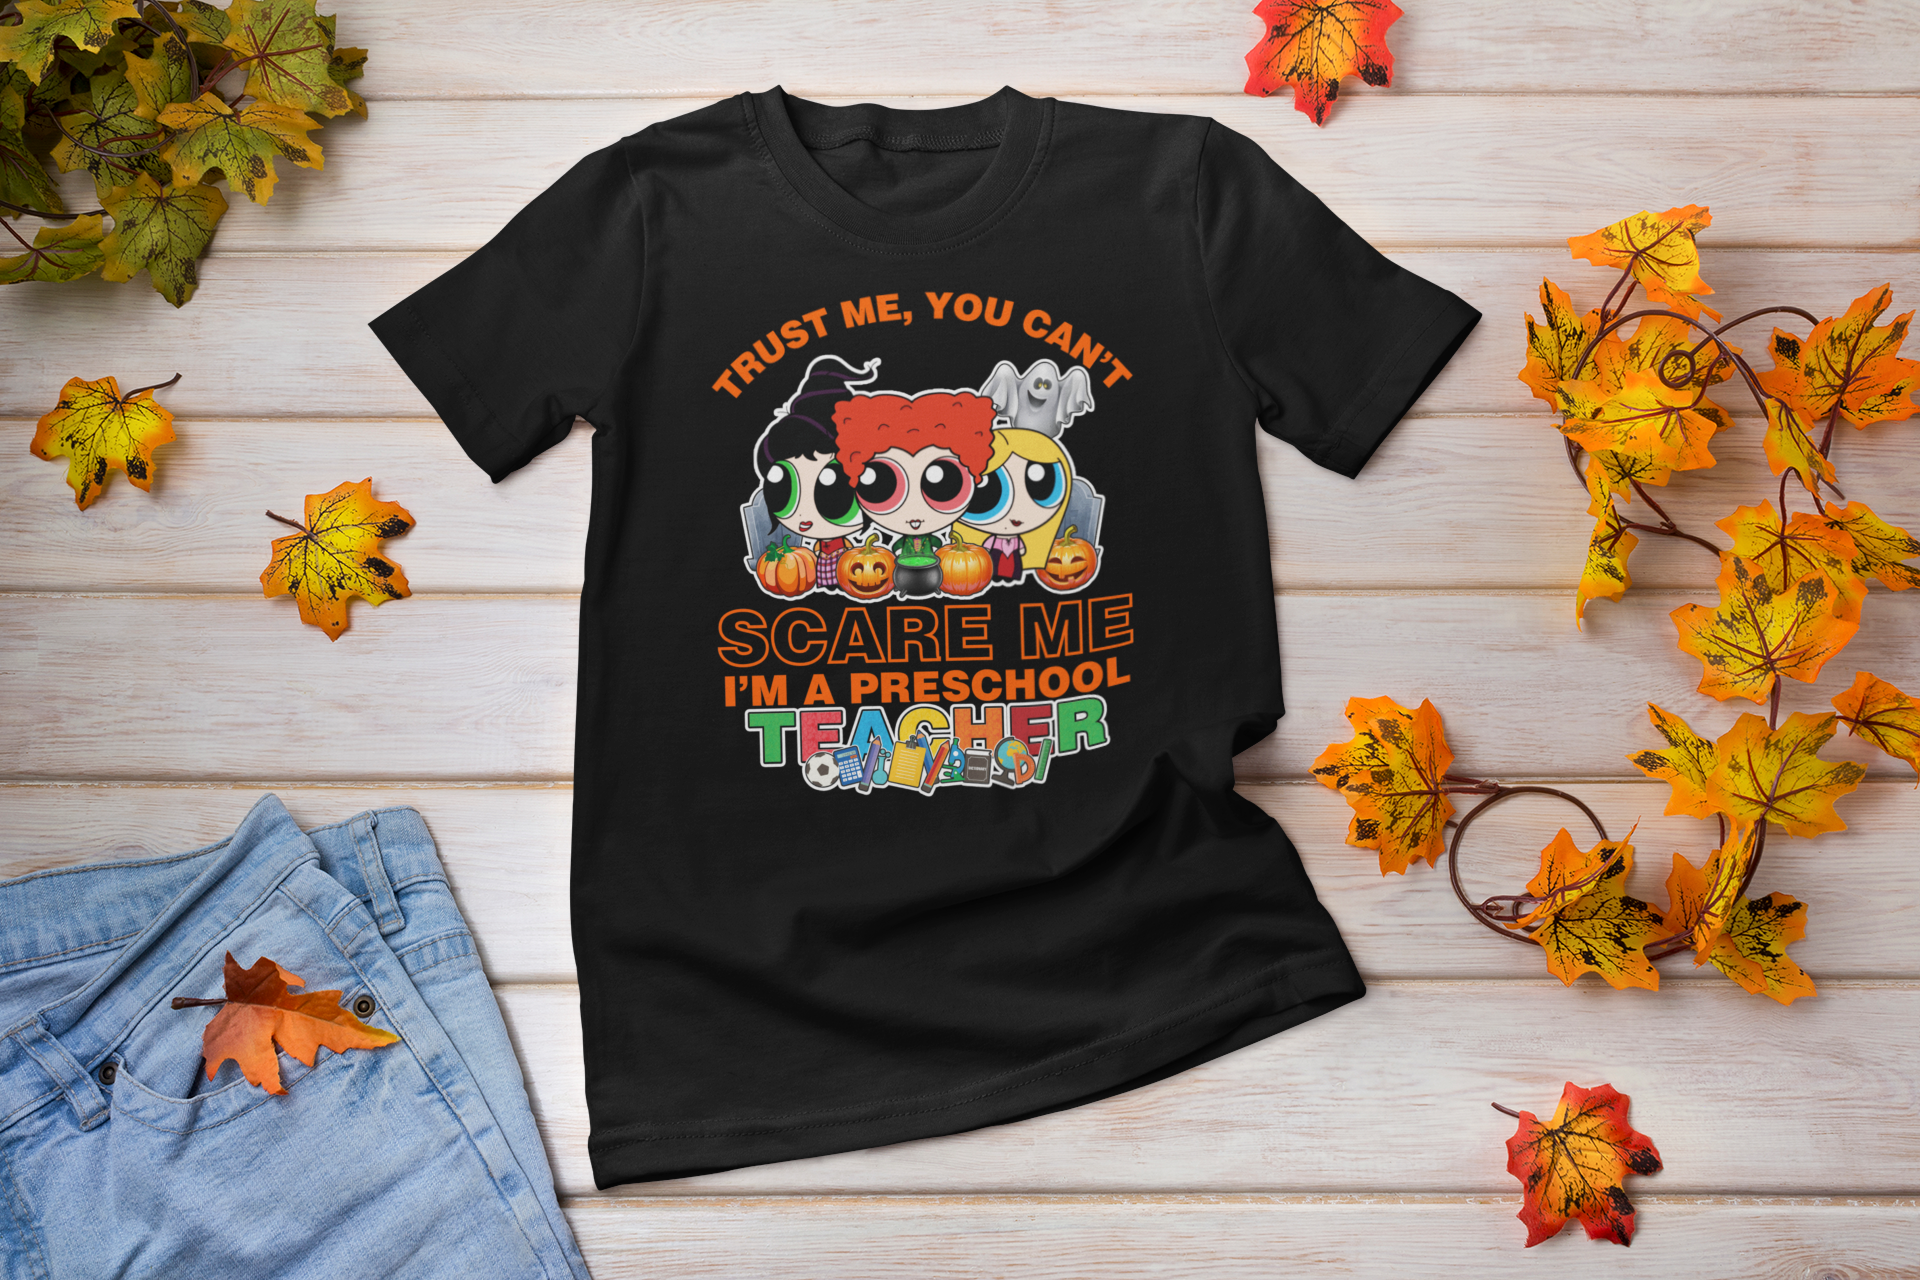 You Can't Scare Me Preschool Teacher Hocus Pocus halloween shirt - Wilson Design Group